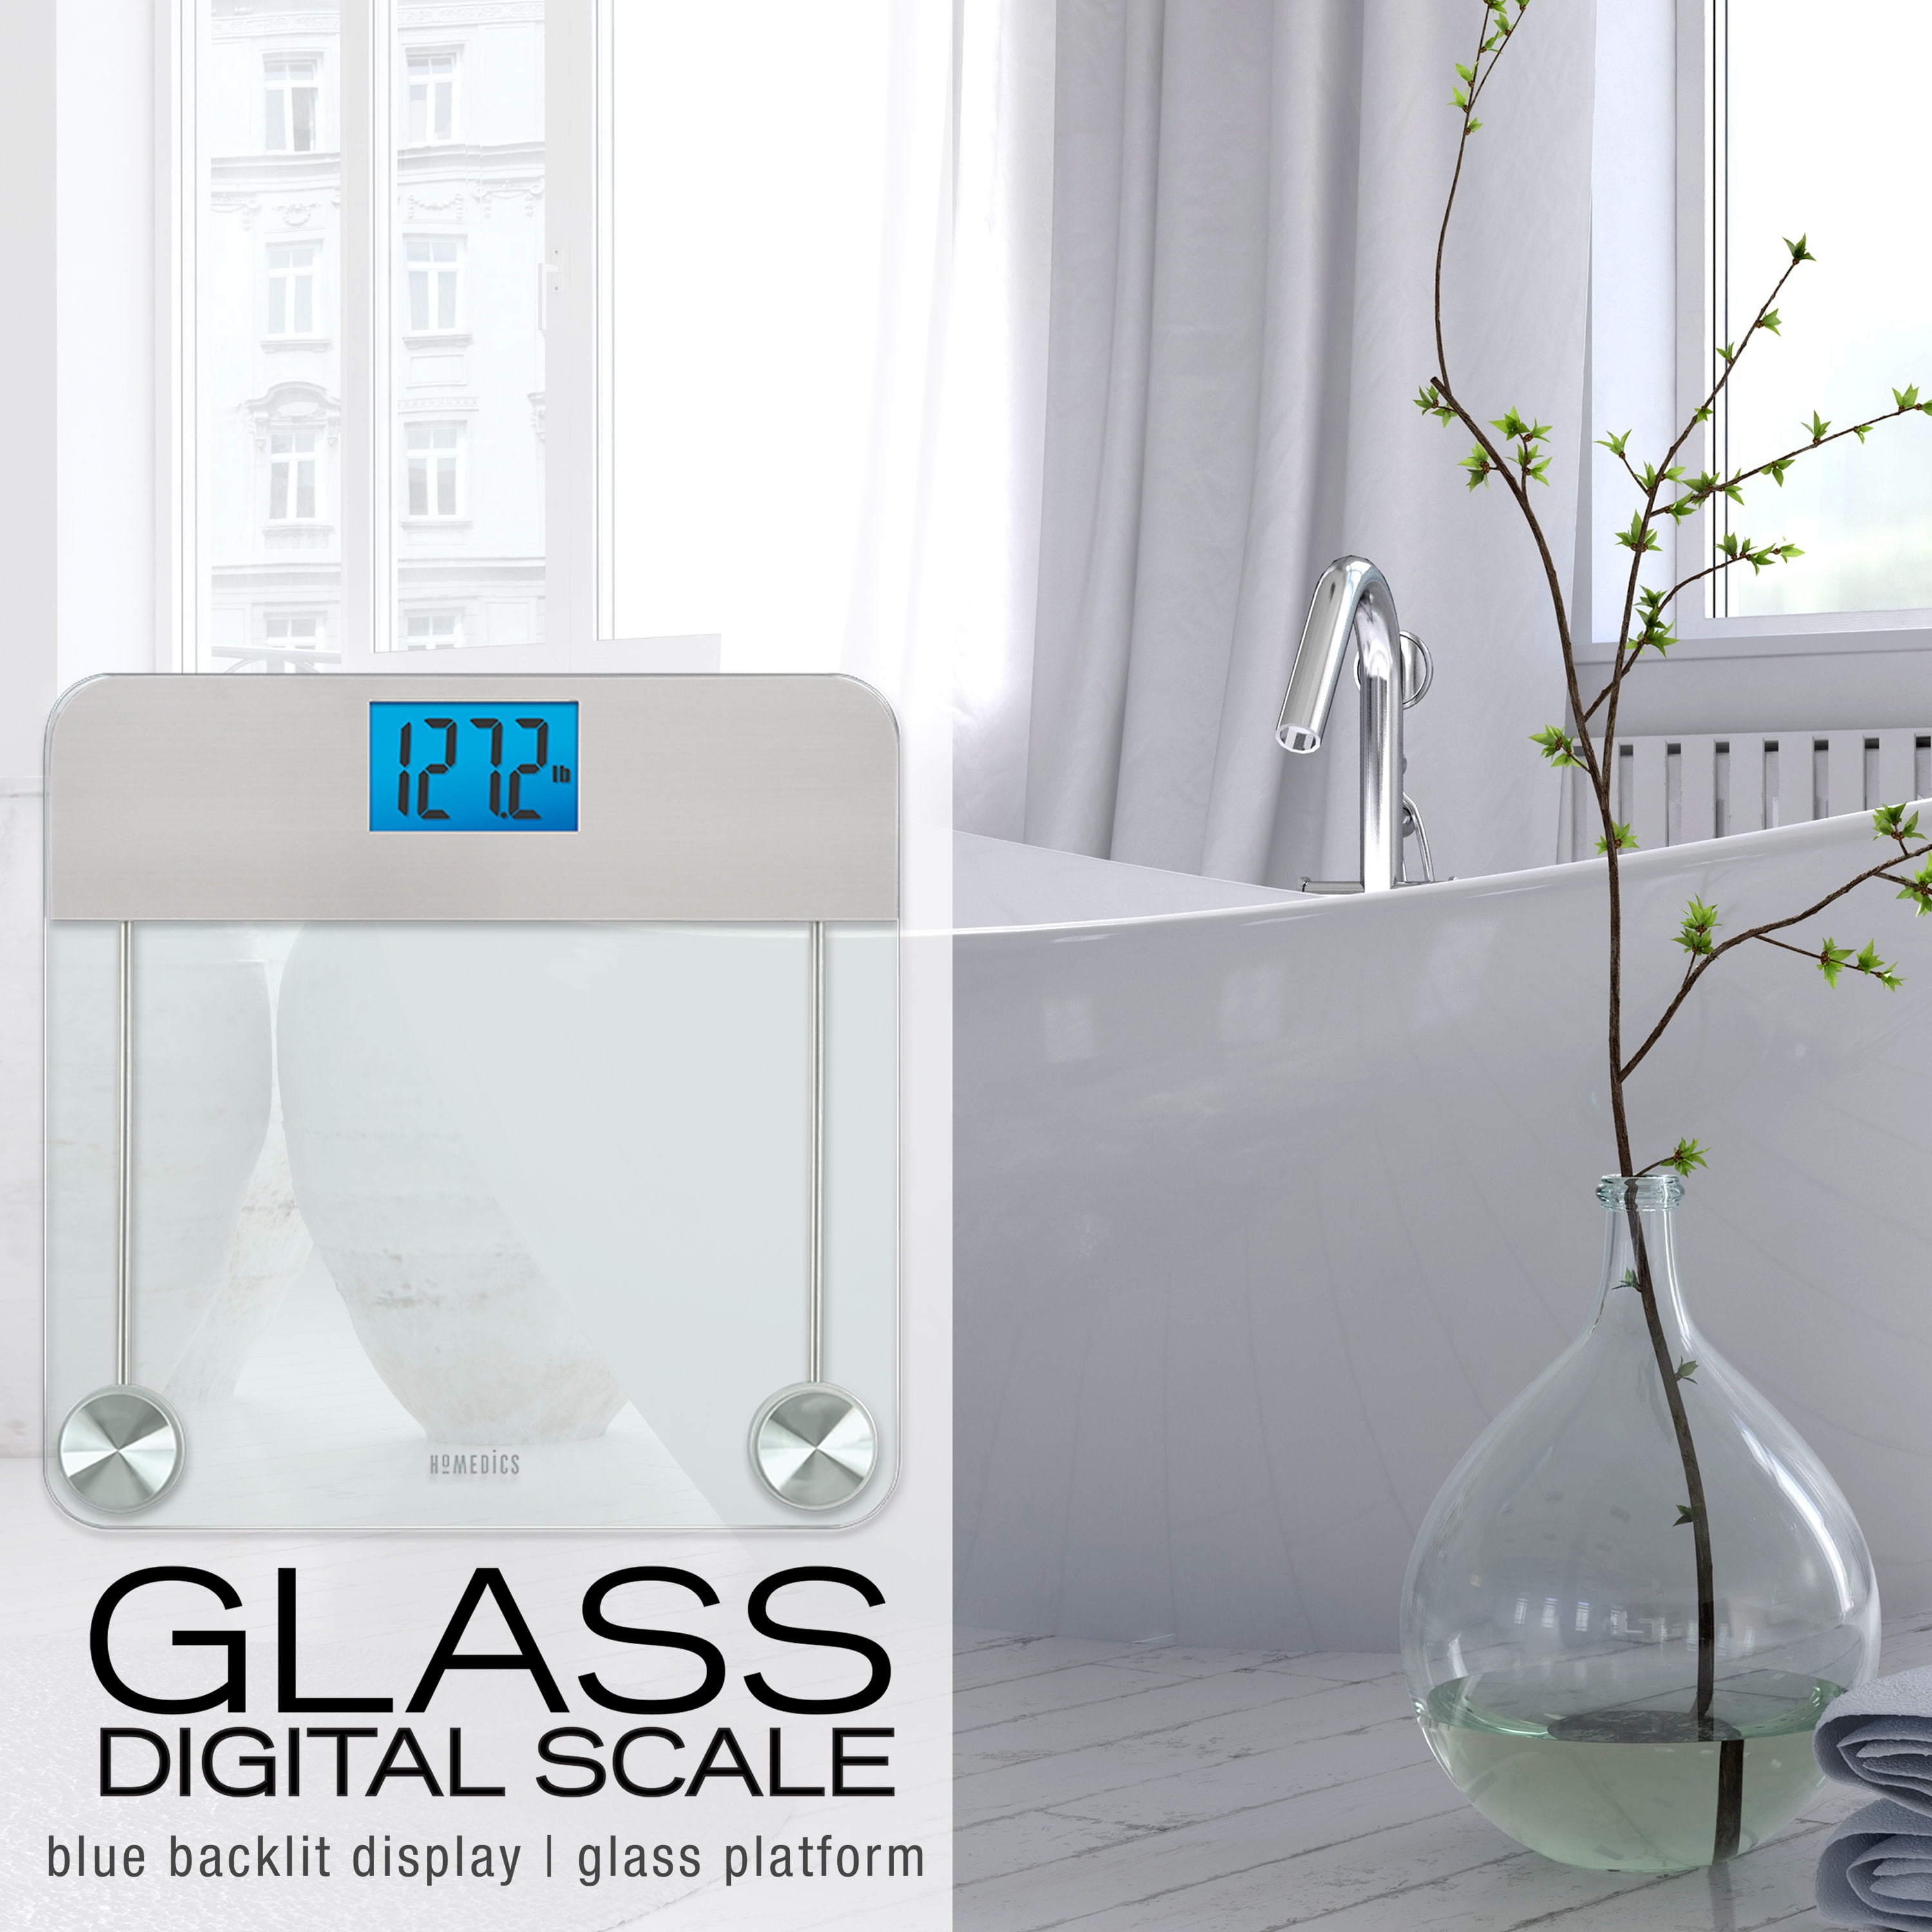 Homedics Digital Bath Scale